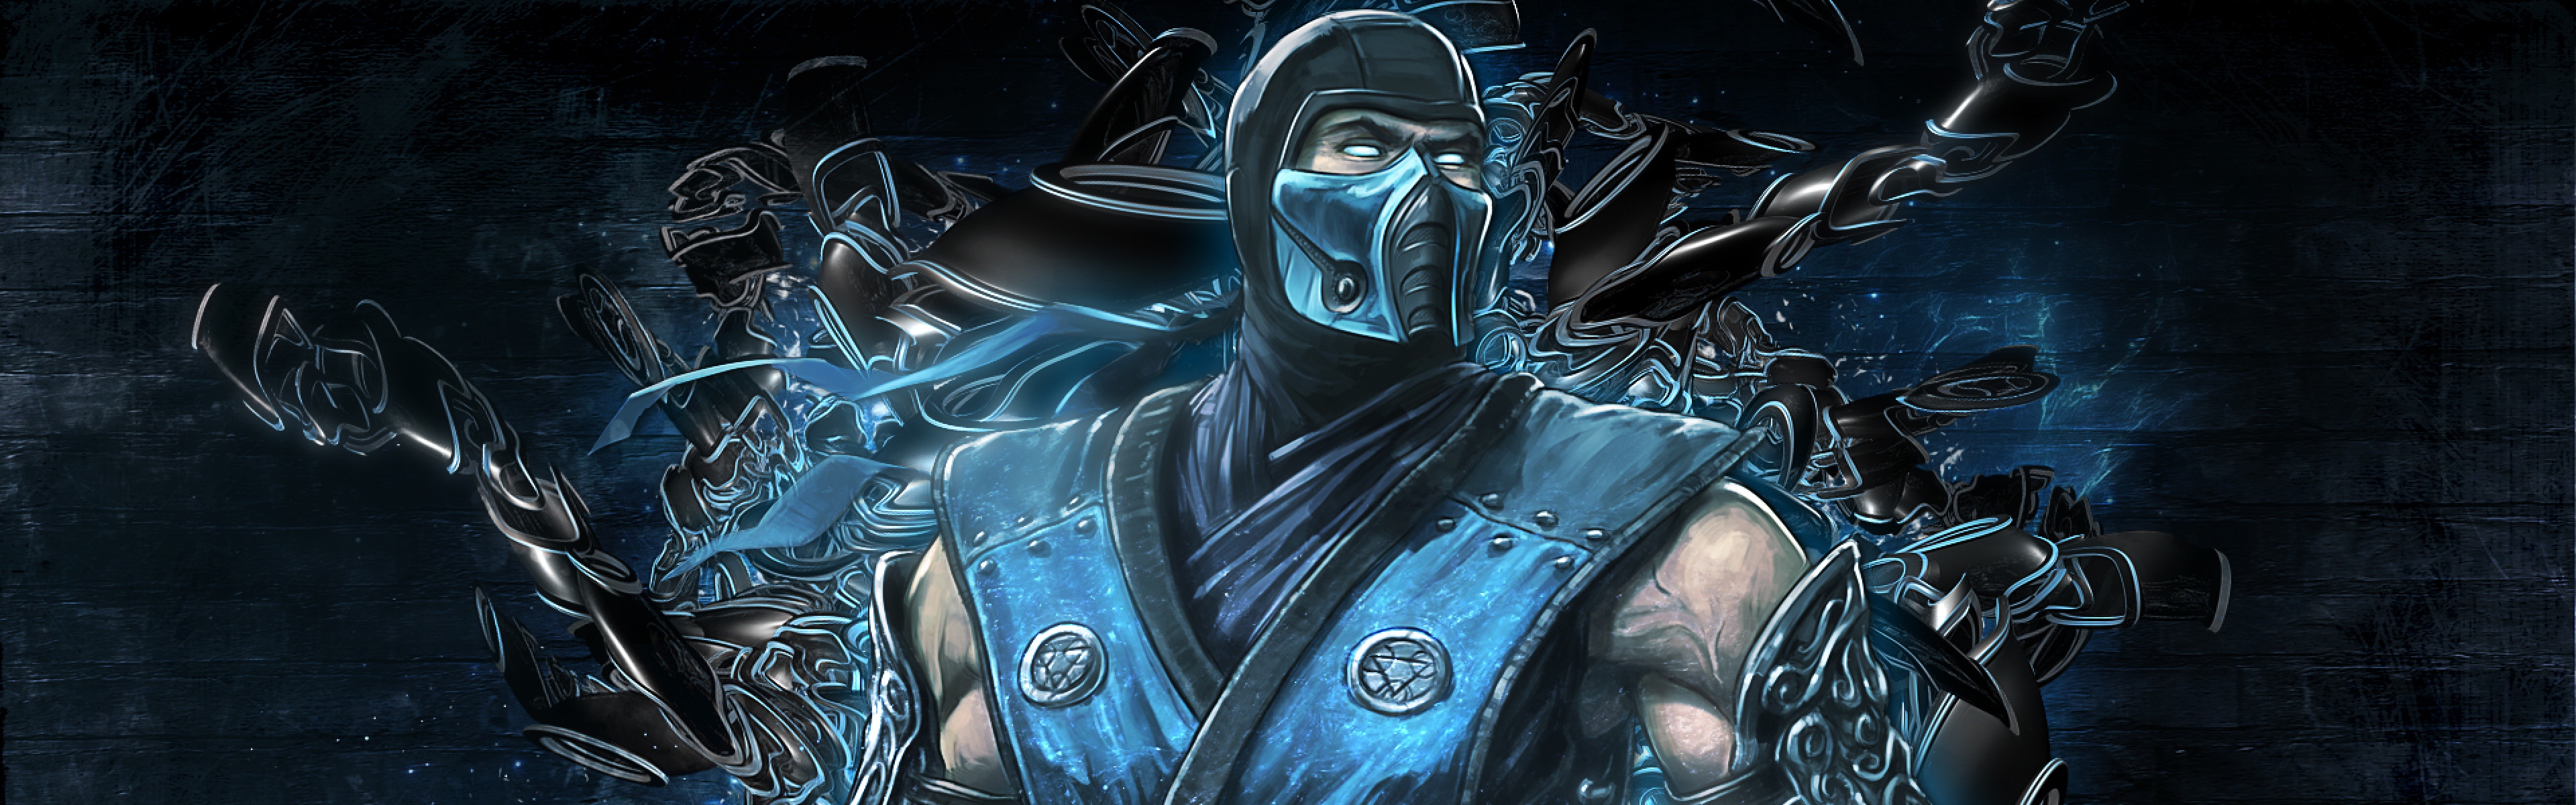 Mortal Kombat Sub Zero Video Game Wallpaper X